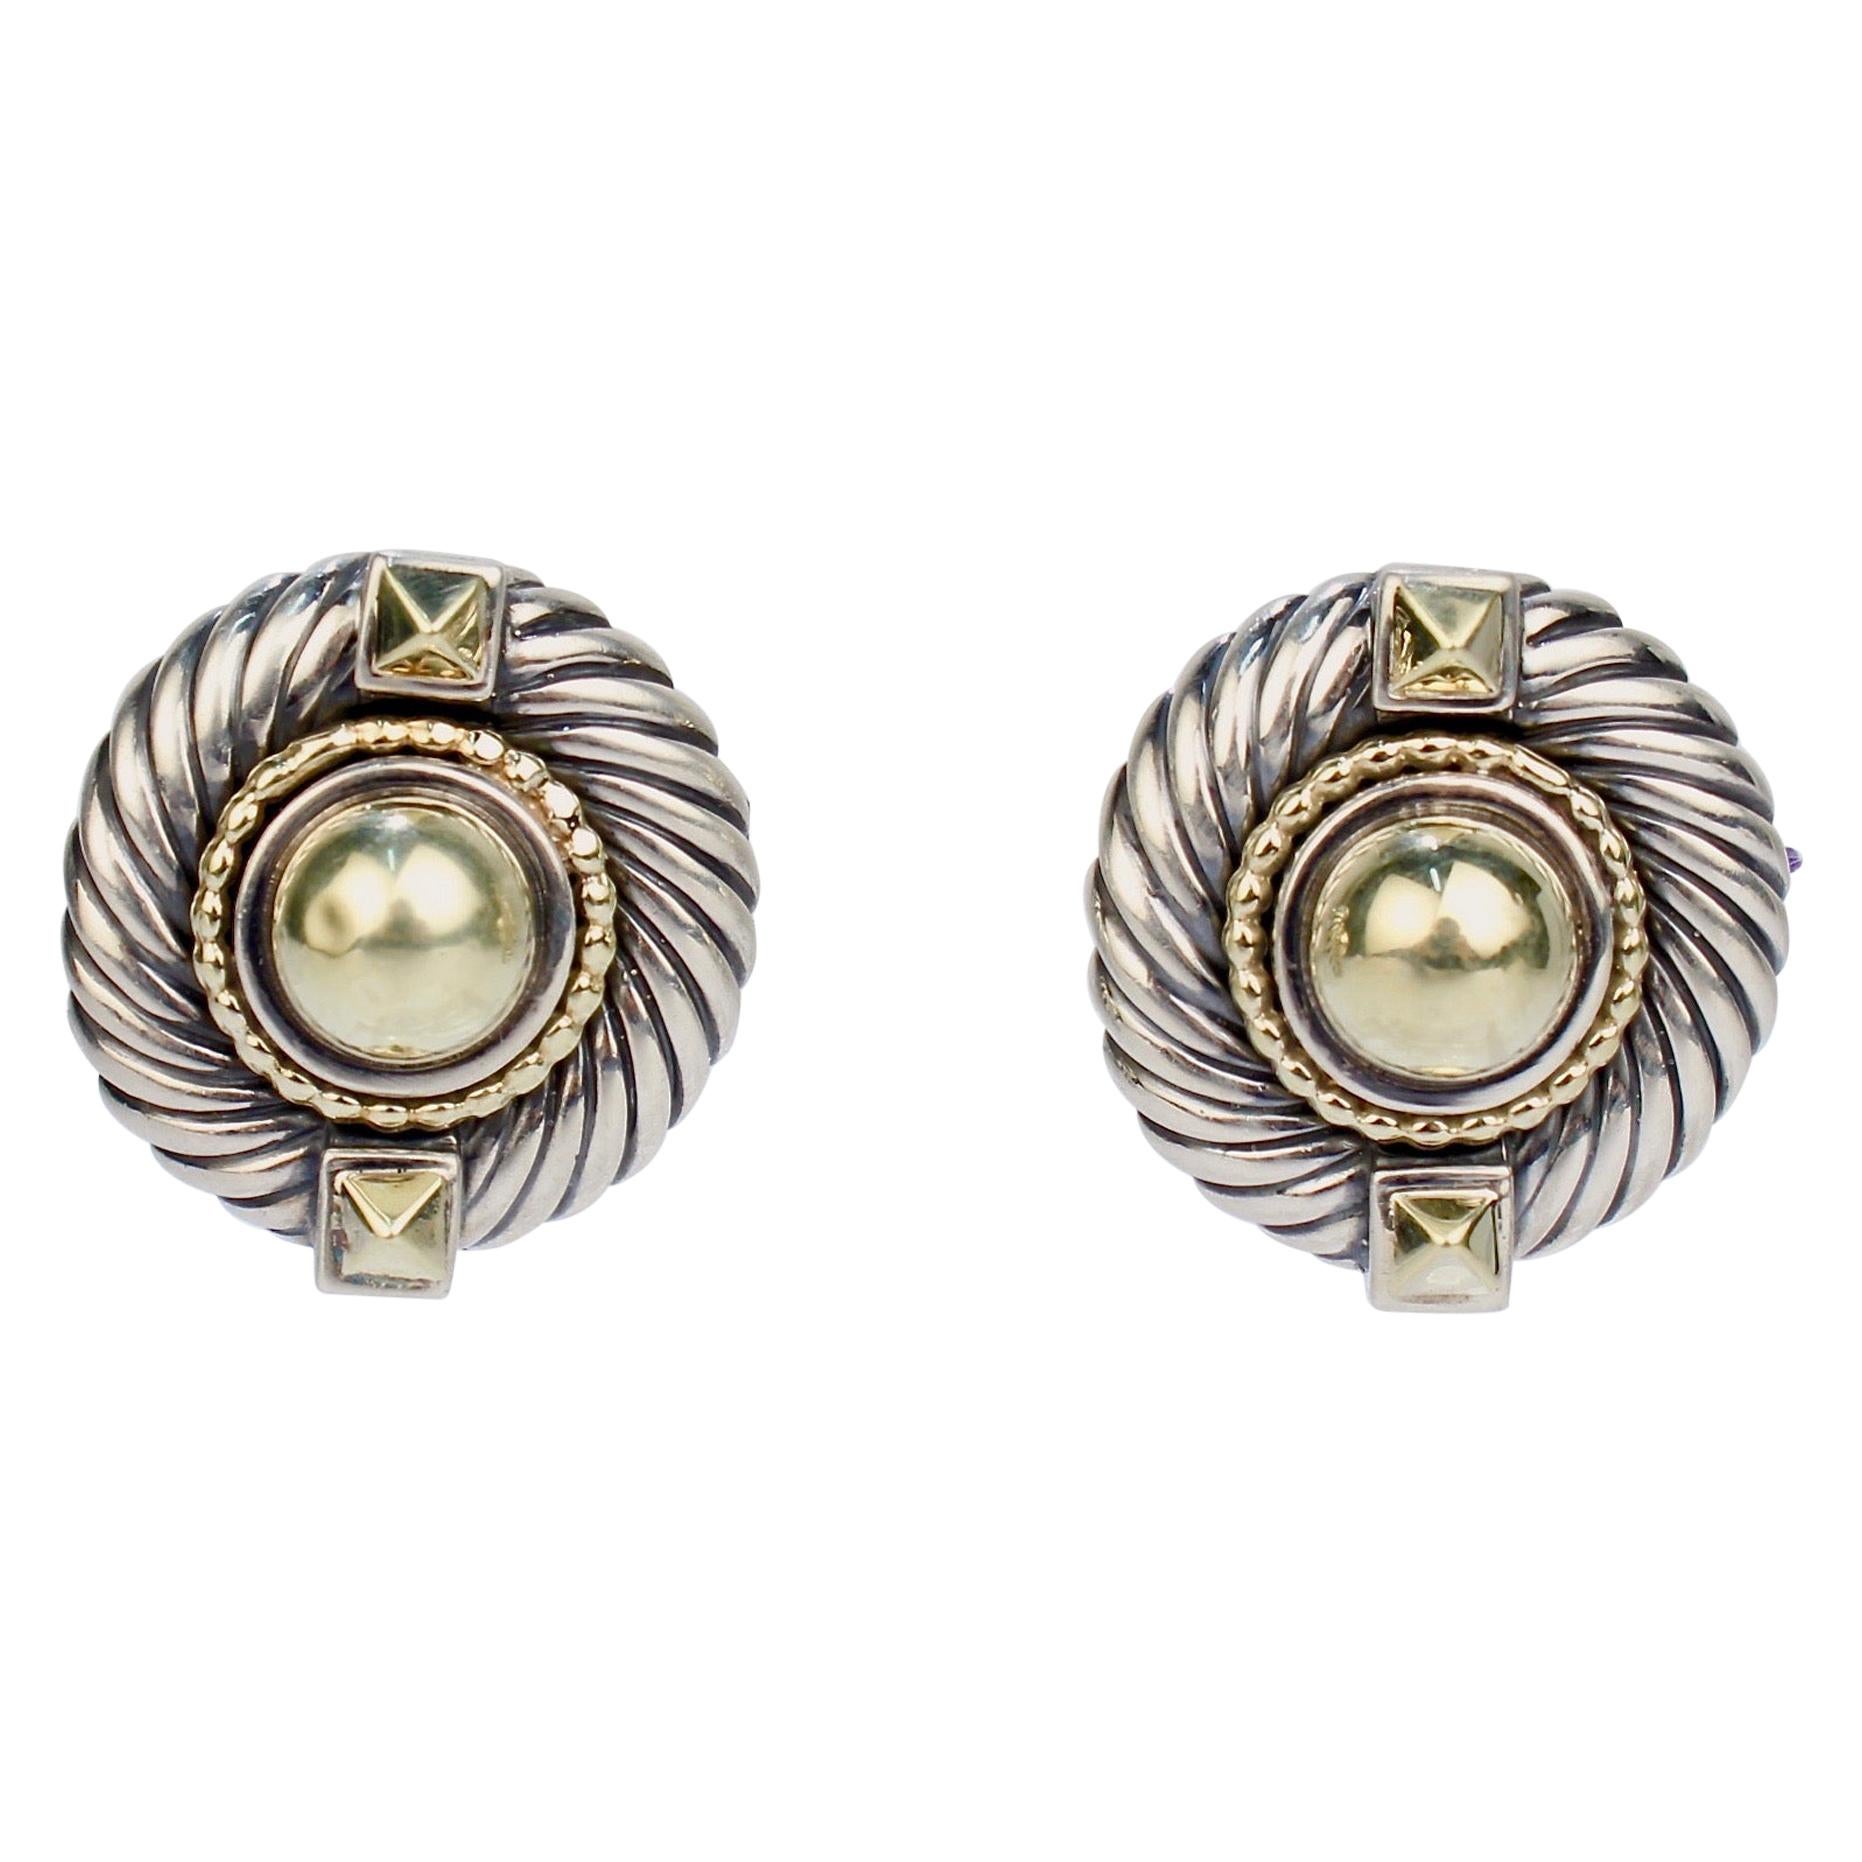 David Yurman Renaissance 14 Karat Gold and Sterling Silver Earrings